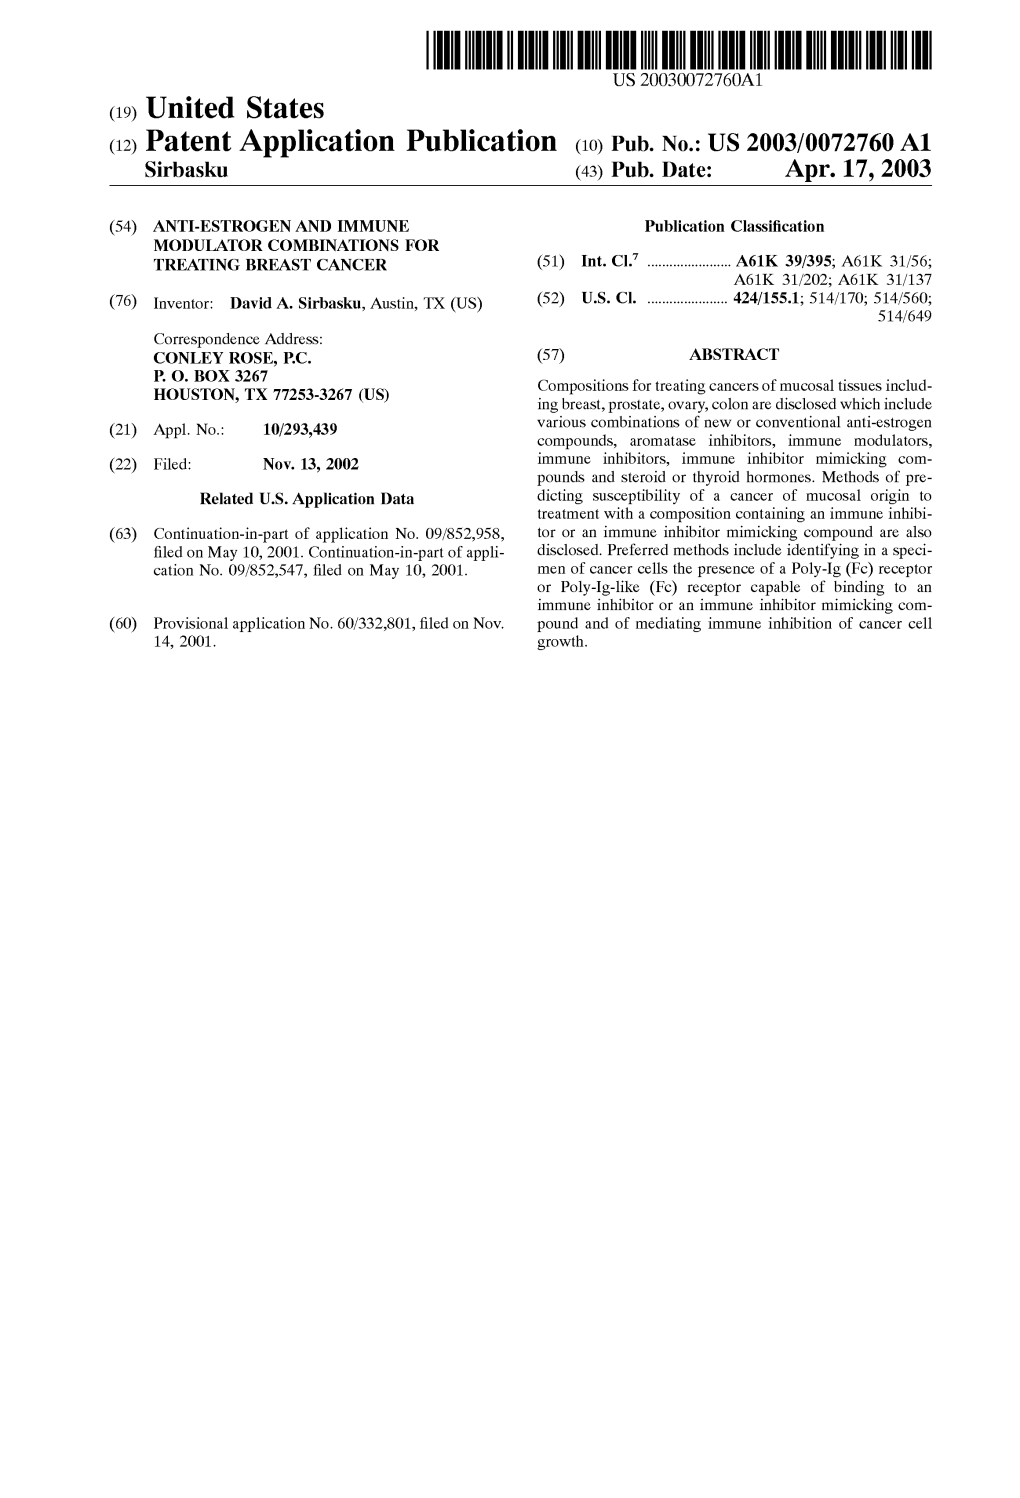 (12) Patent Application Publication (10) Pub. No.: US 2003/0072760 A1 Sirbasku (43) Pub